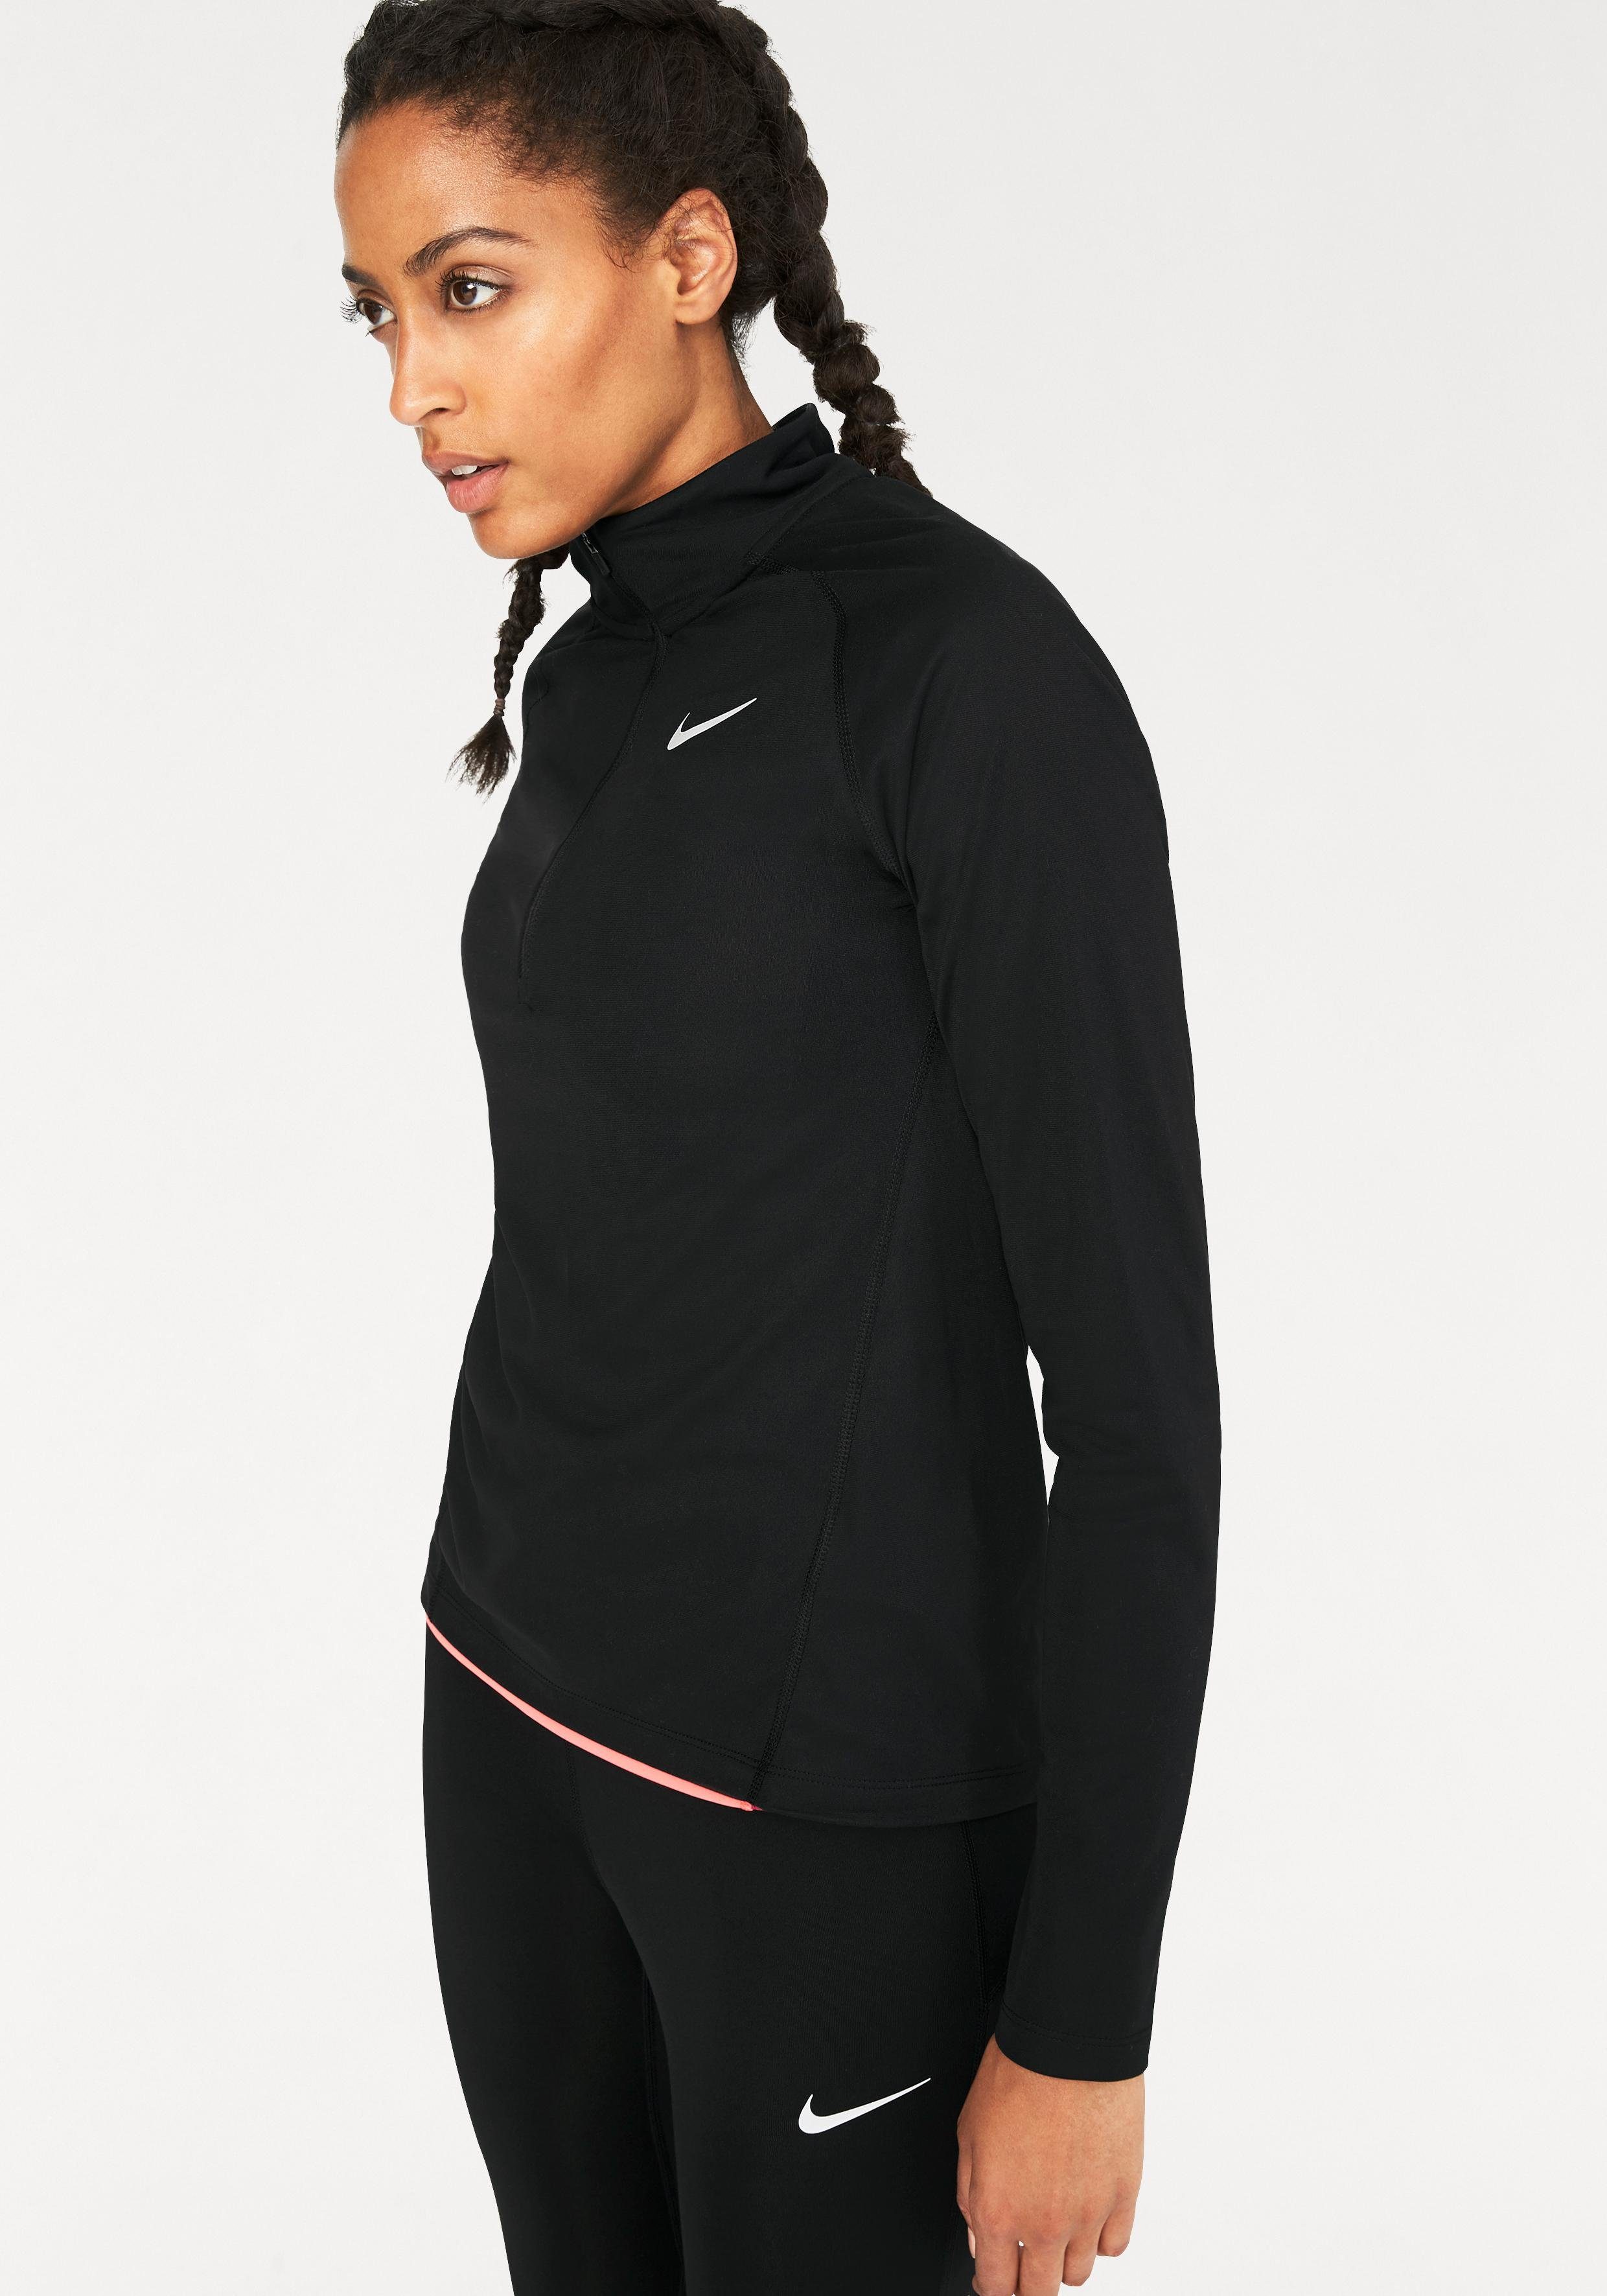 Otto - Nike NU 15% KORTING: Nike runningshirt WOMEN NIKE TOP CORE HALFZIP MID